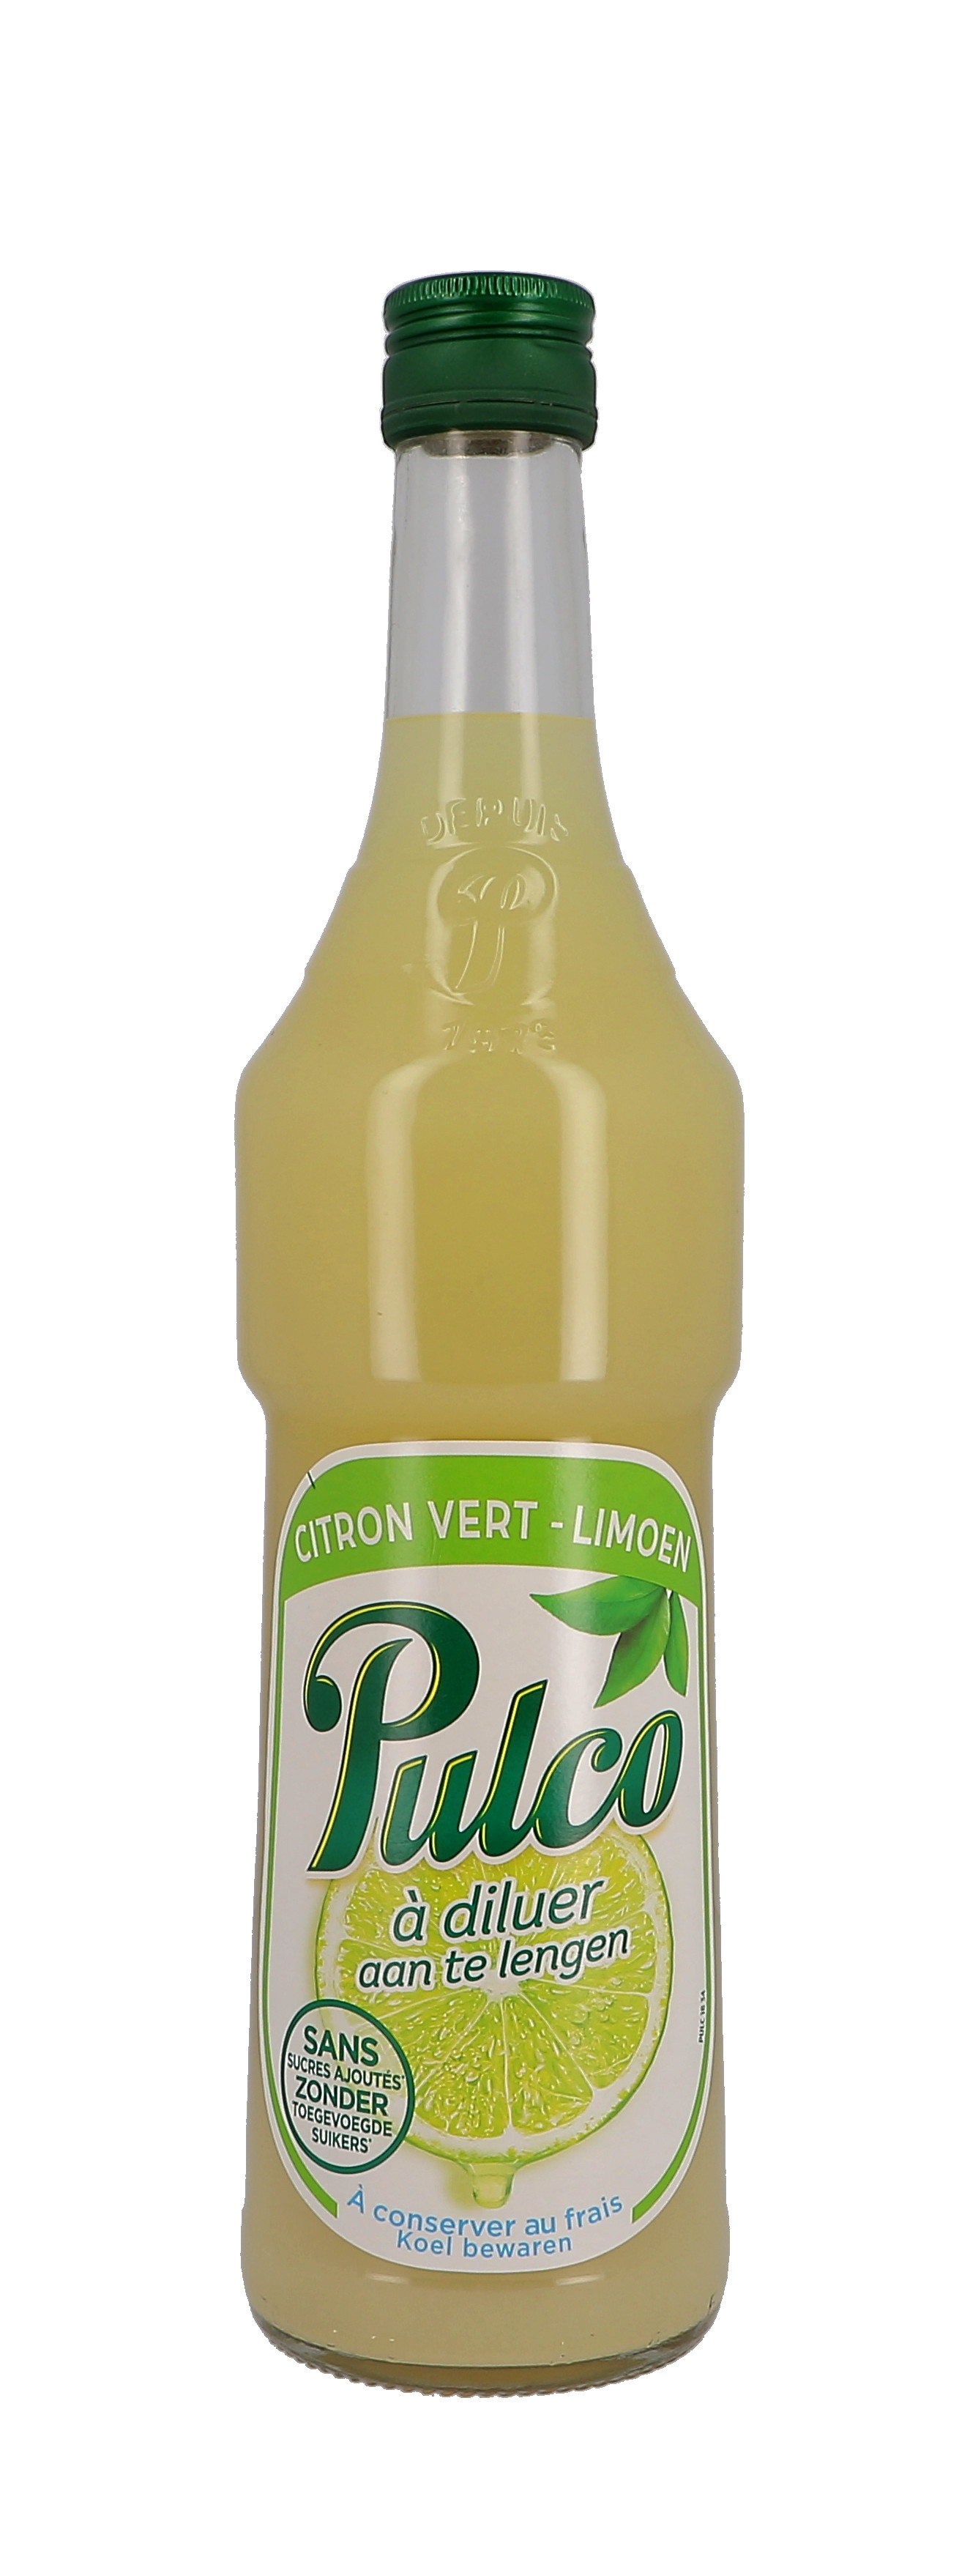 Pulco limoen sap lemon vert 70cl 0%